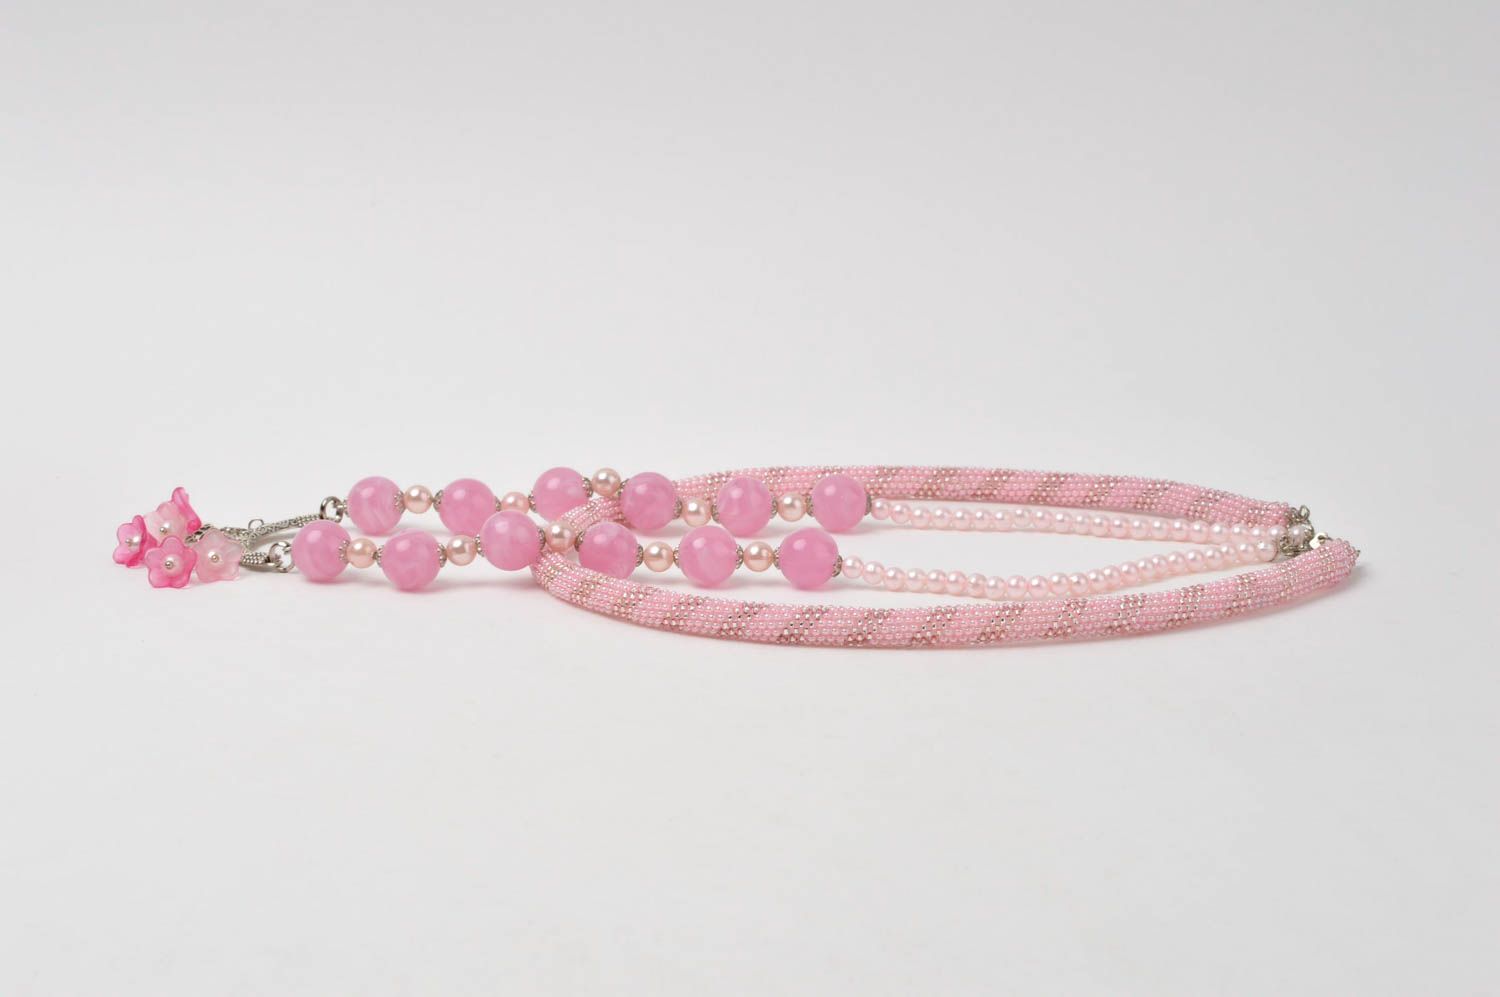 Handmade beaded necklace tender pink necklace elegant designer accessory photo 2